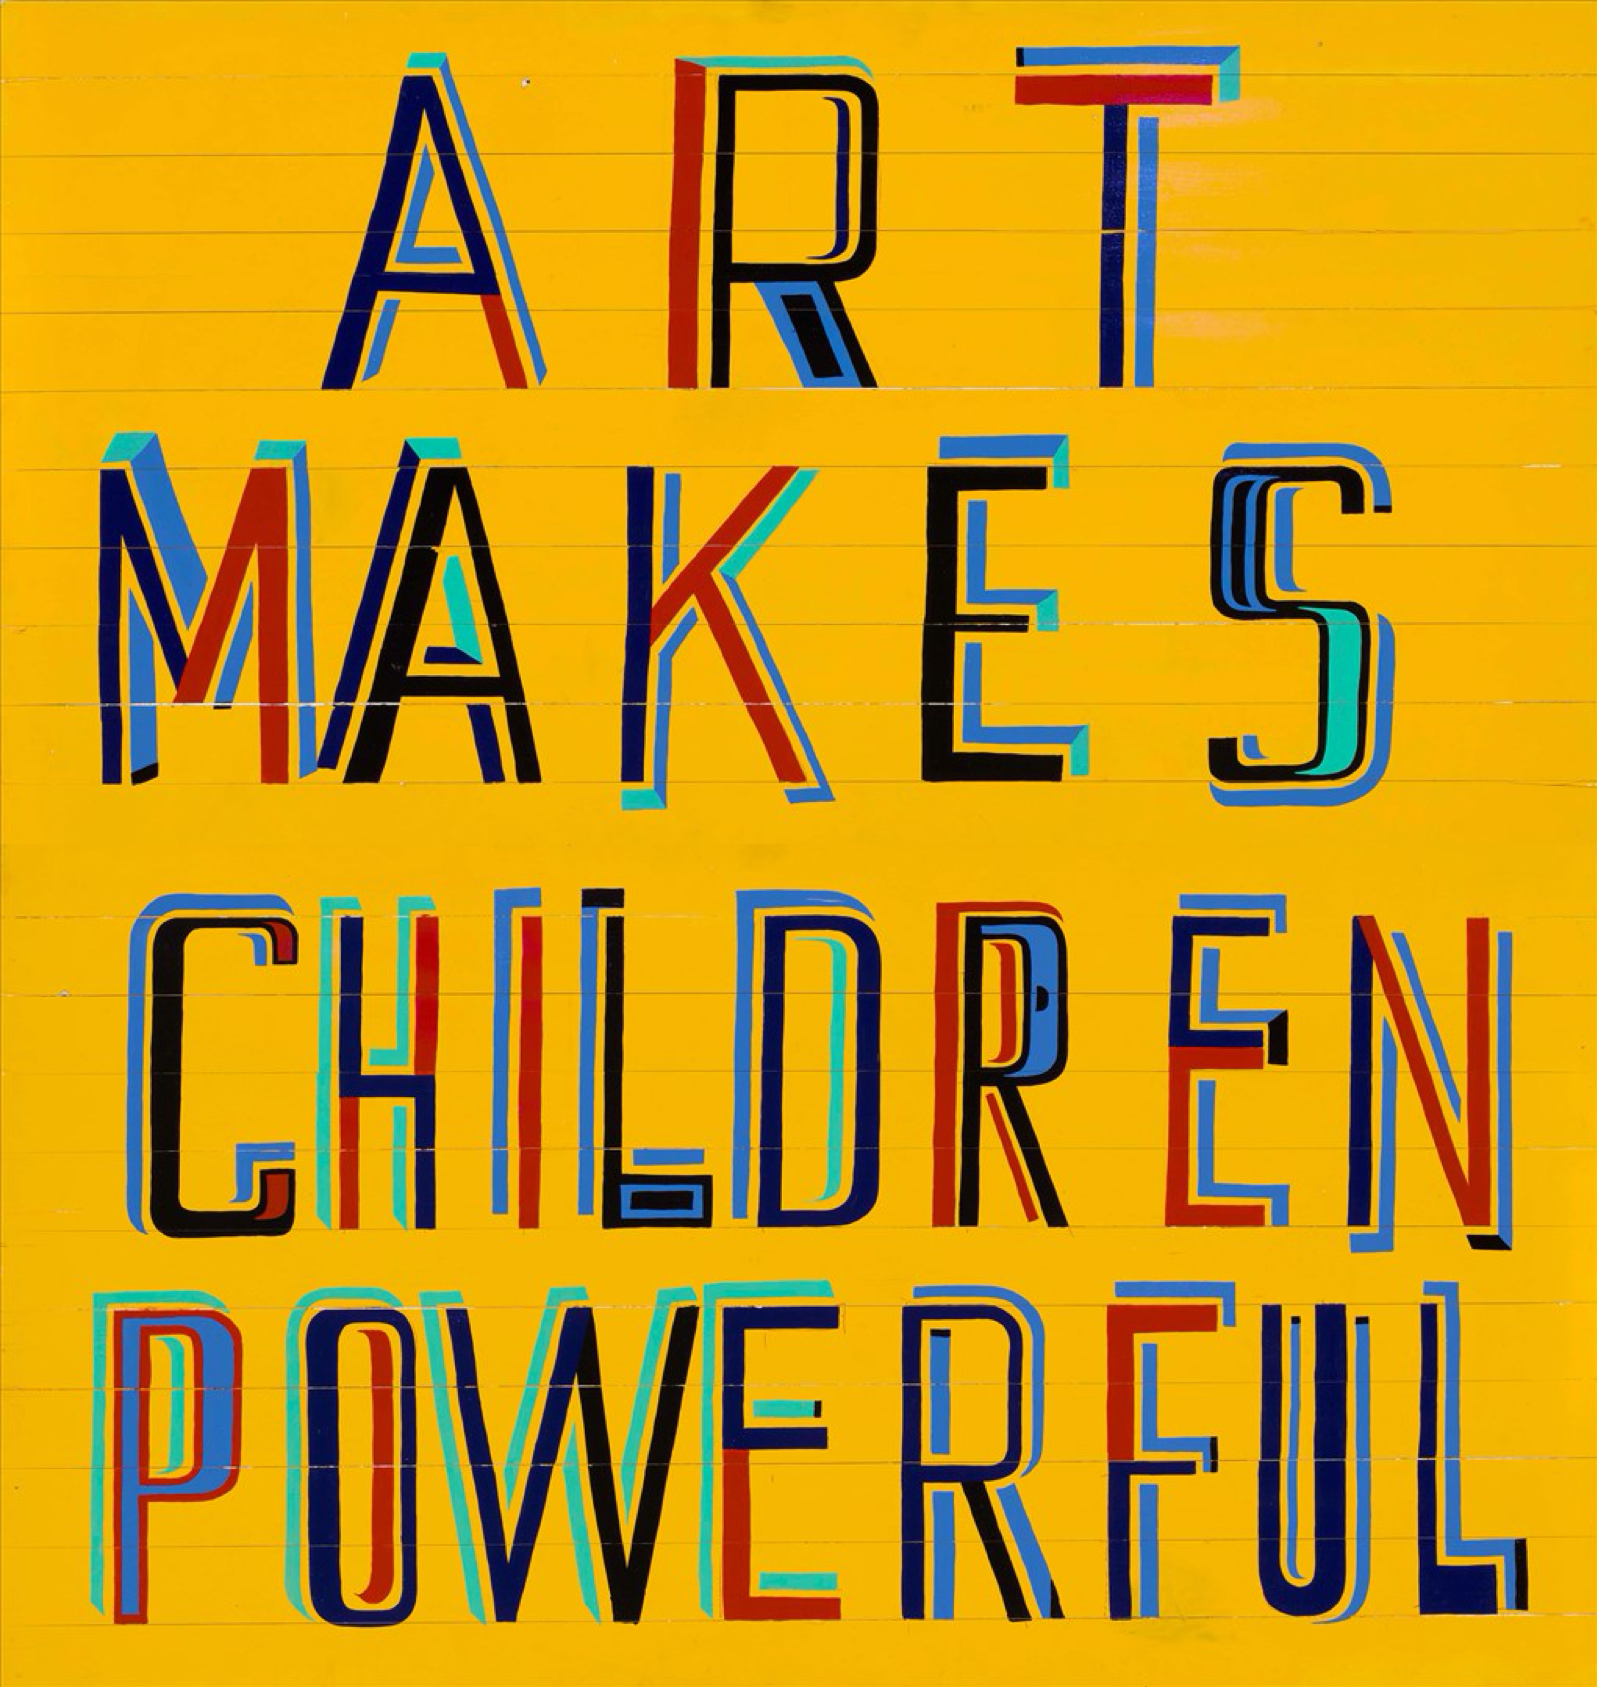 Art Makes Children Powerful - Bob and Roberta Smith